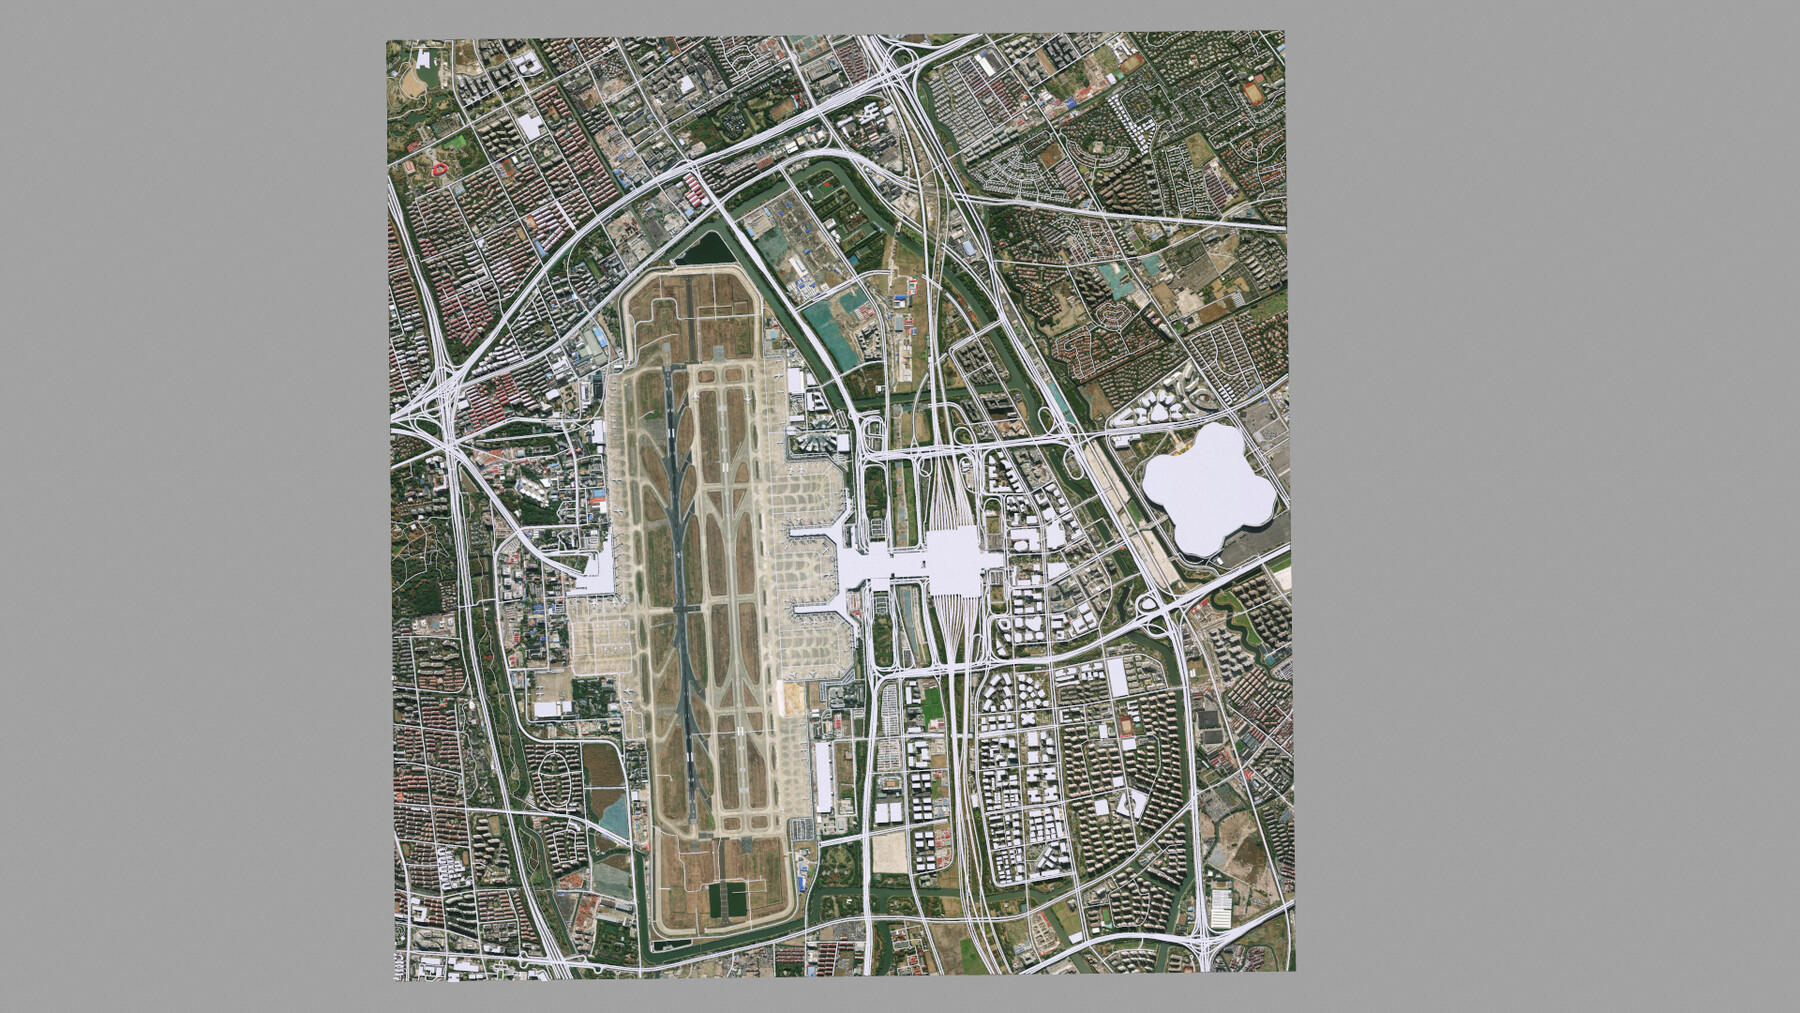 File:Shanghai HongQiao Airport T2 Terminal.jpg - Wikimedia Commons